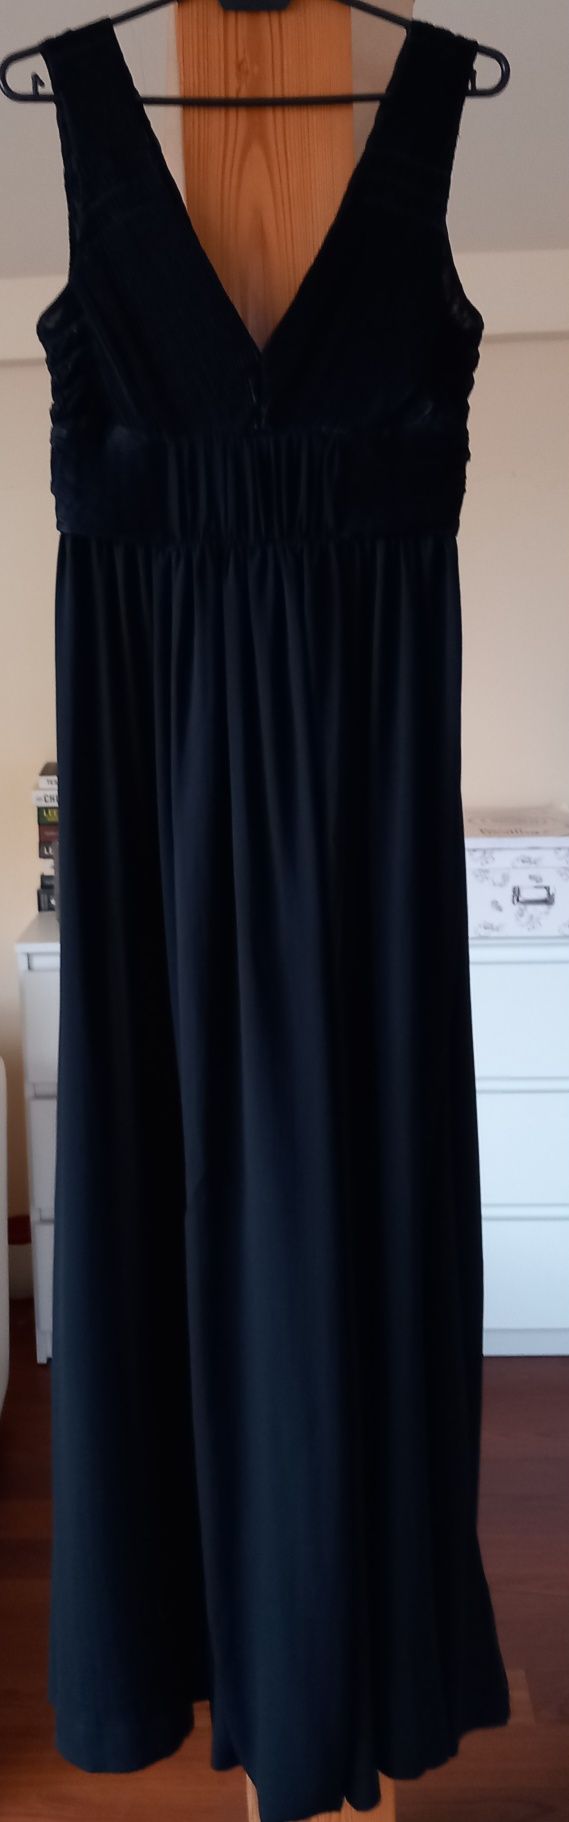 Długa czarna suknia roz.36